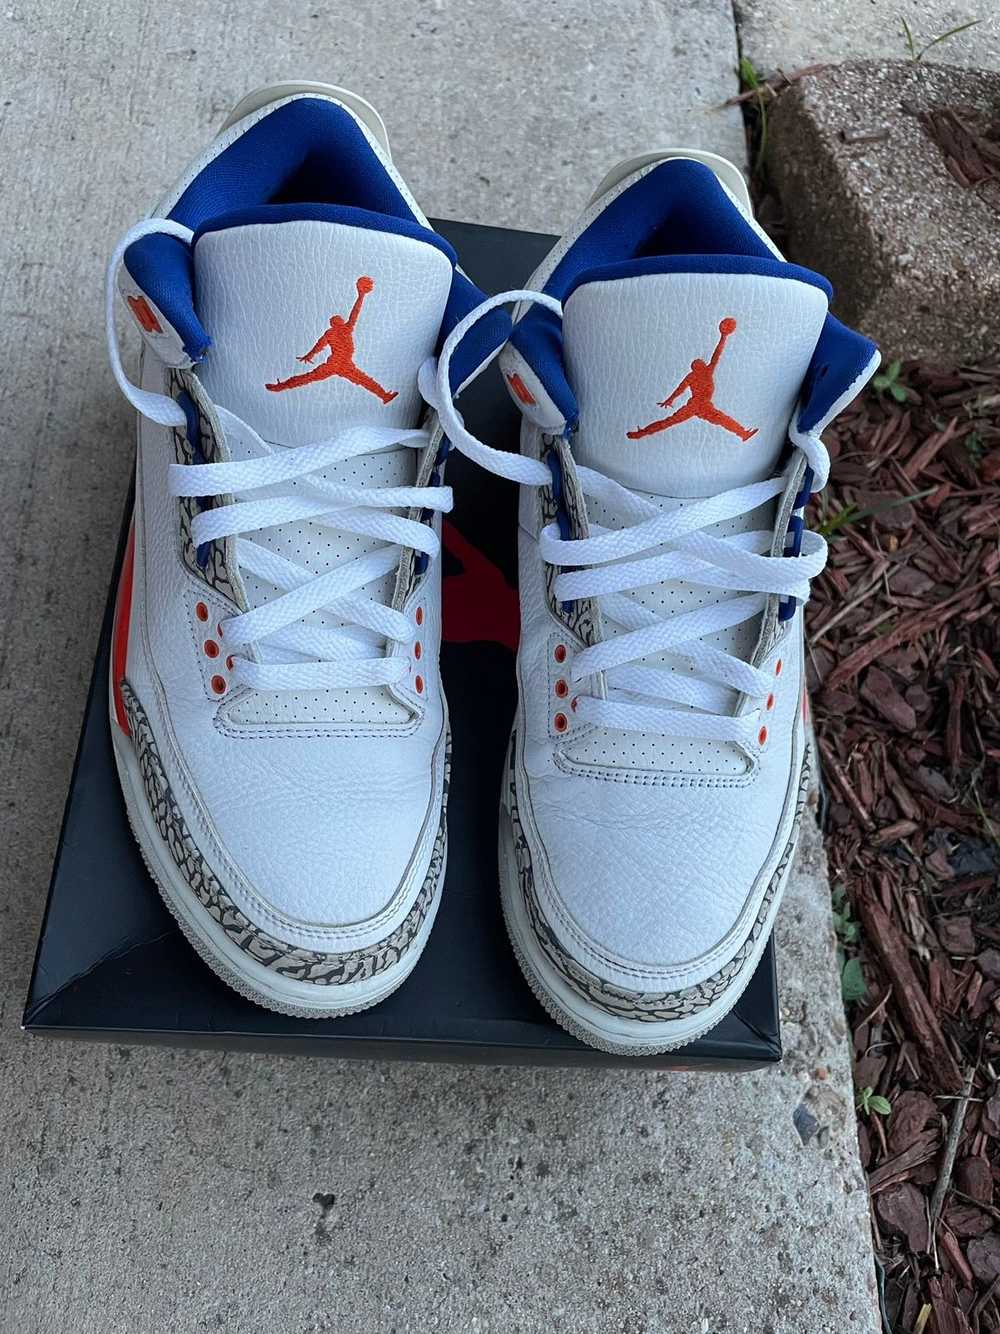 Jordan Brand × Nike Jordan 3 knicks - image 5